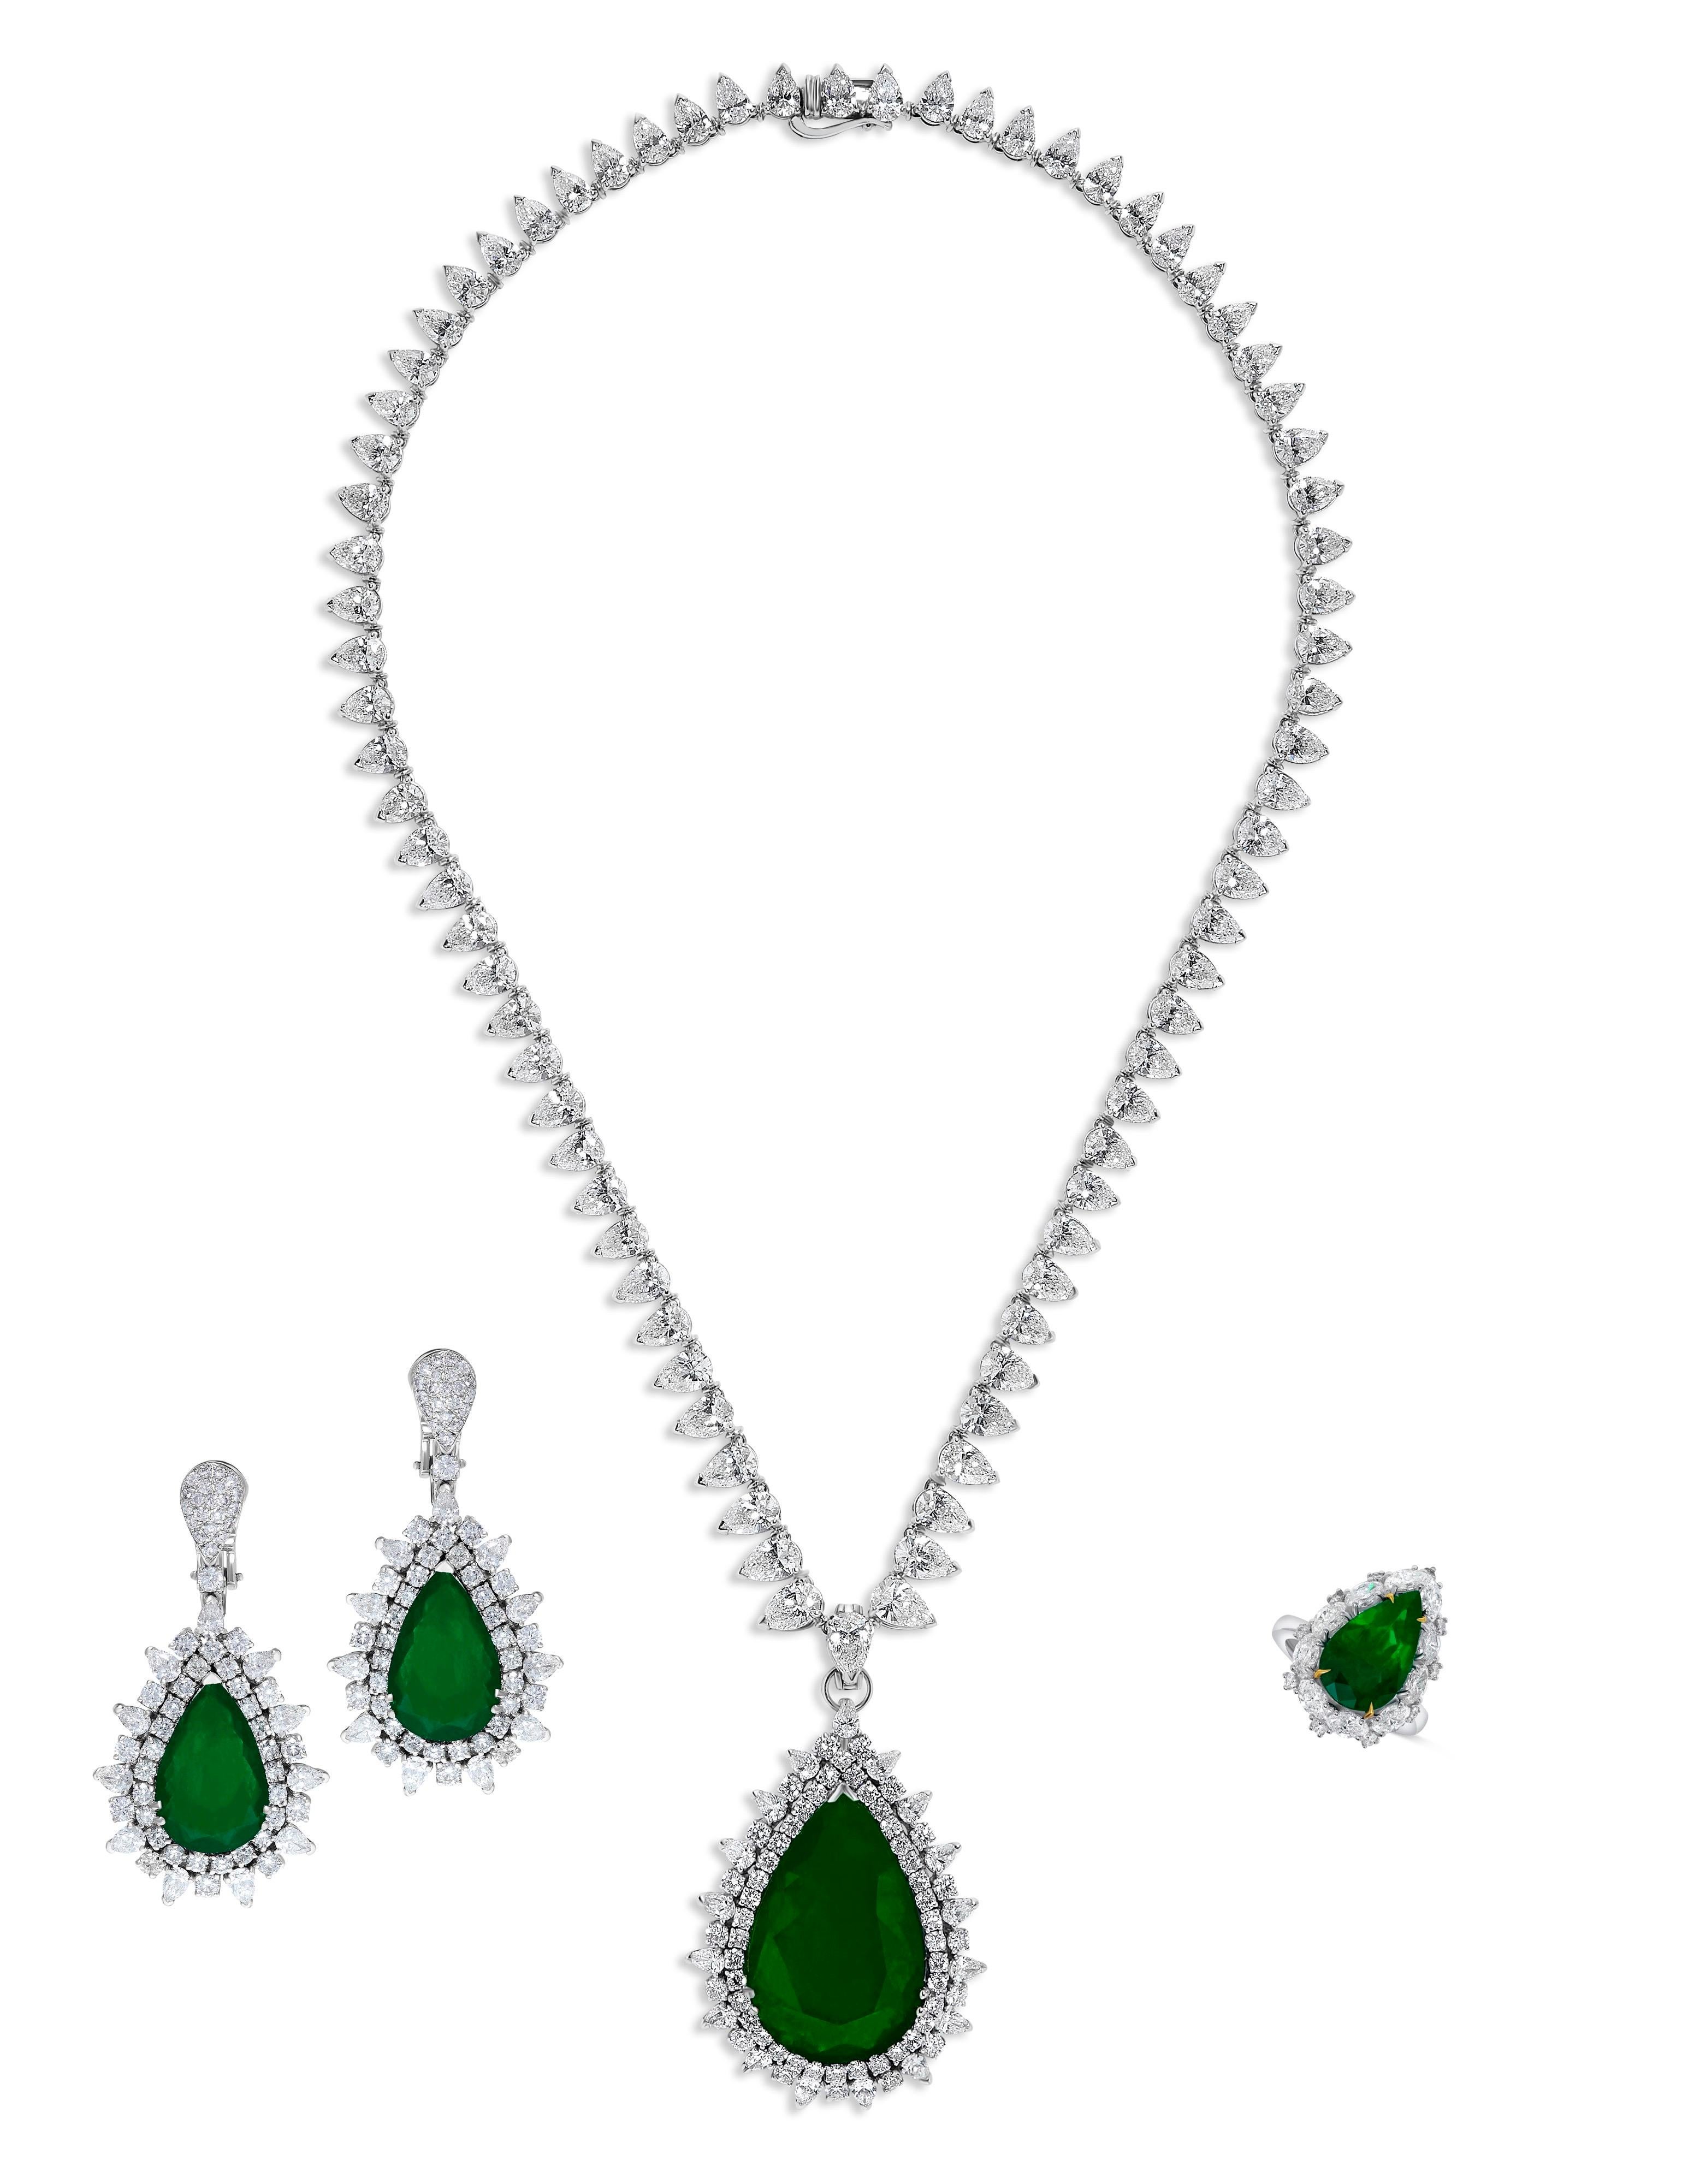 Pear Cut Emilio Jewelry Certified 117.00 Carat Colombian Muzo Vivid Green Emerald Suite  For Sale